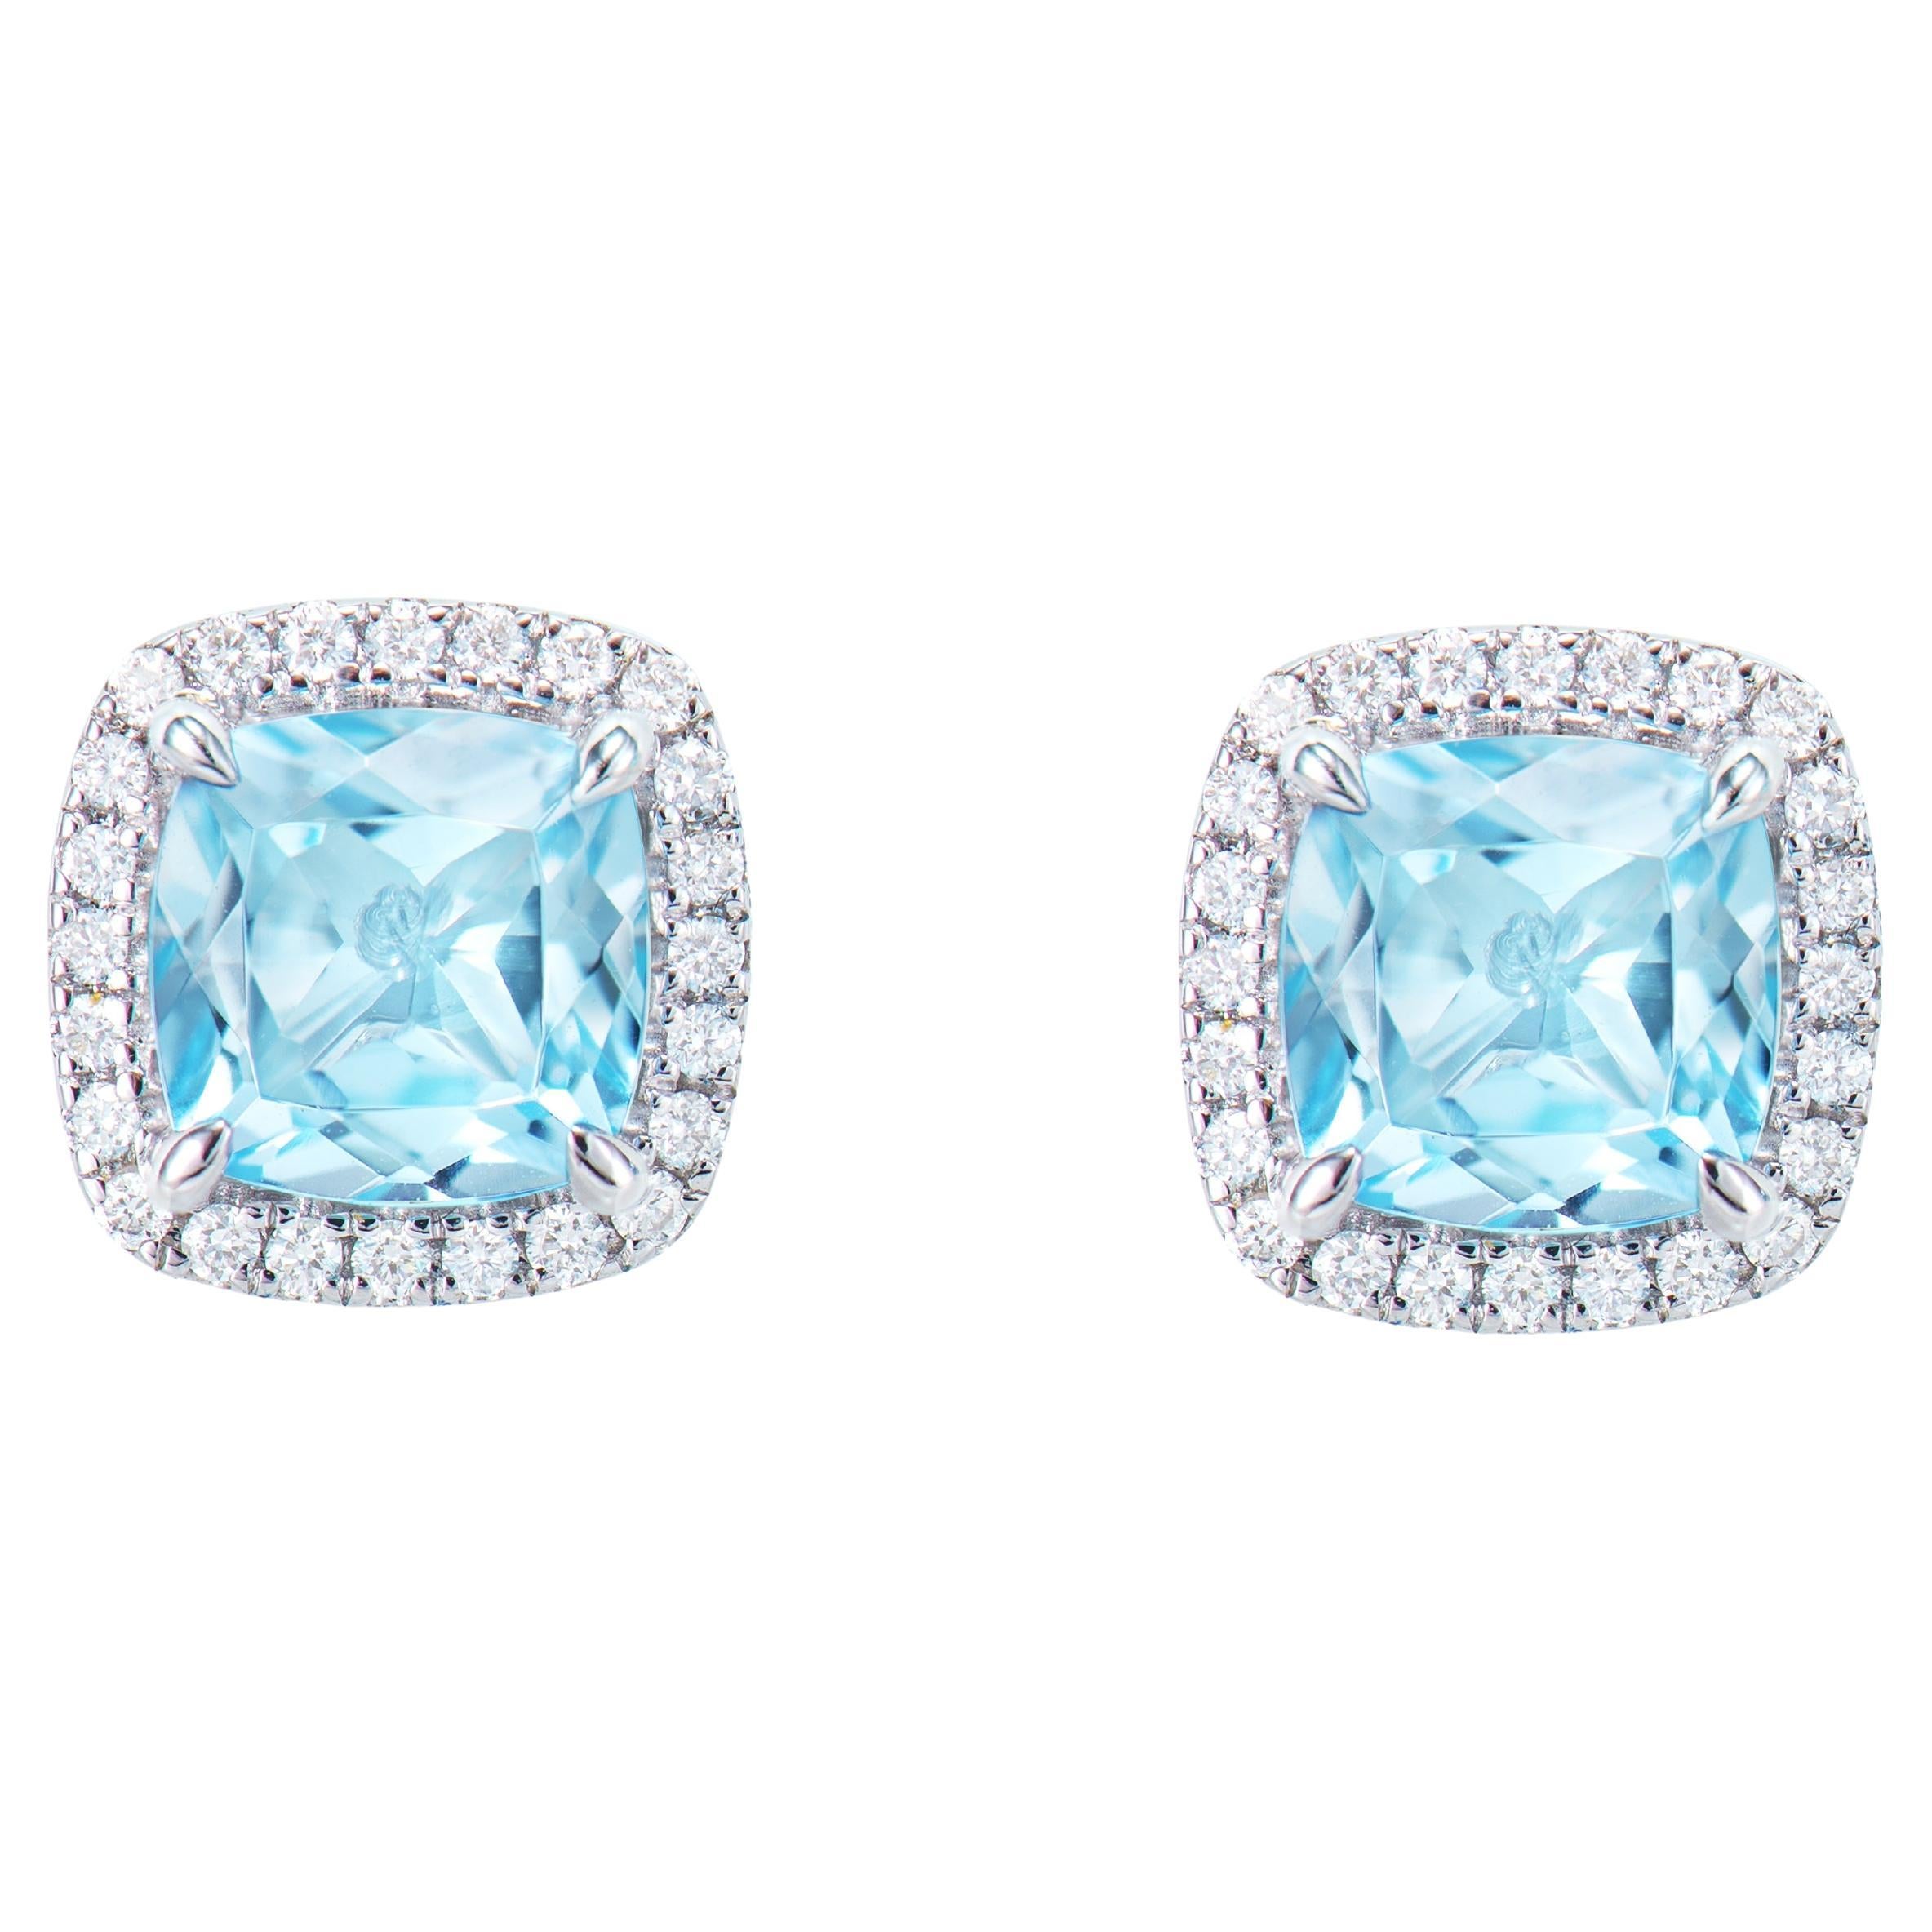 2.19 Carat Sky Blue Topaz Stud Earrings in 18KWG with White Diamond. For Sale